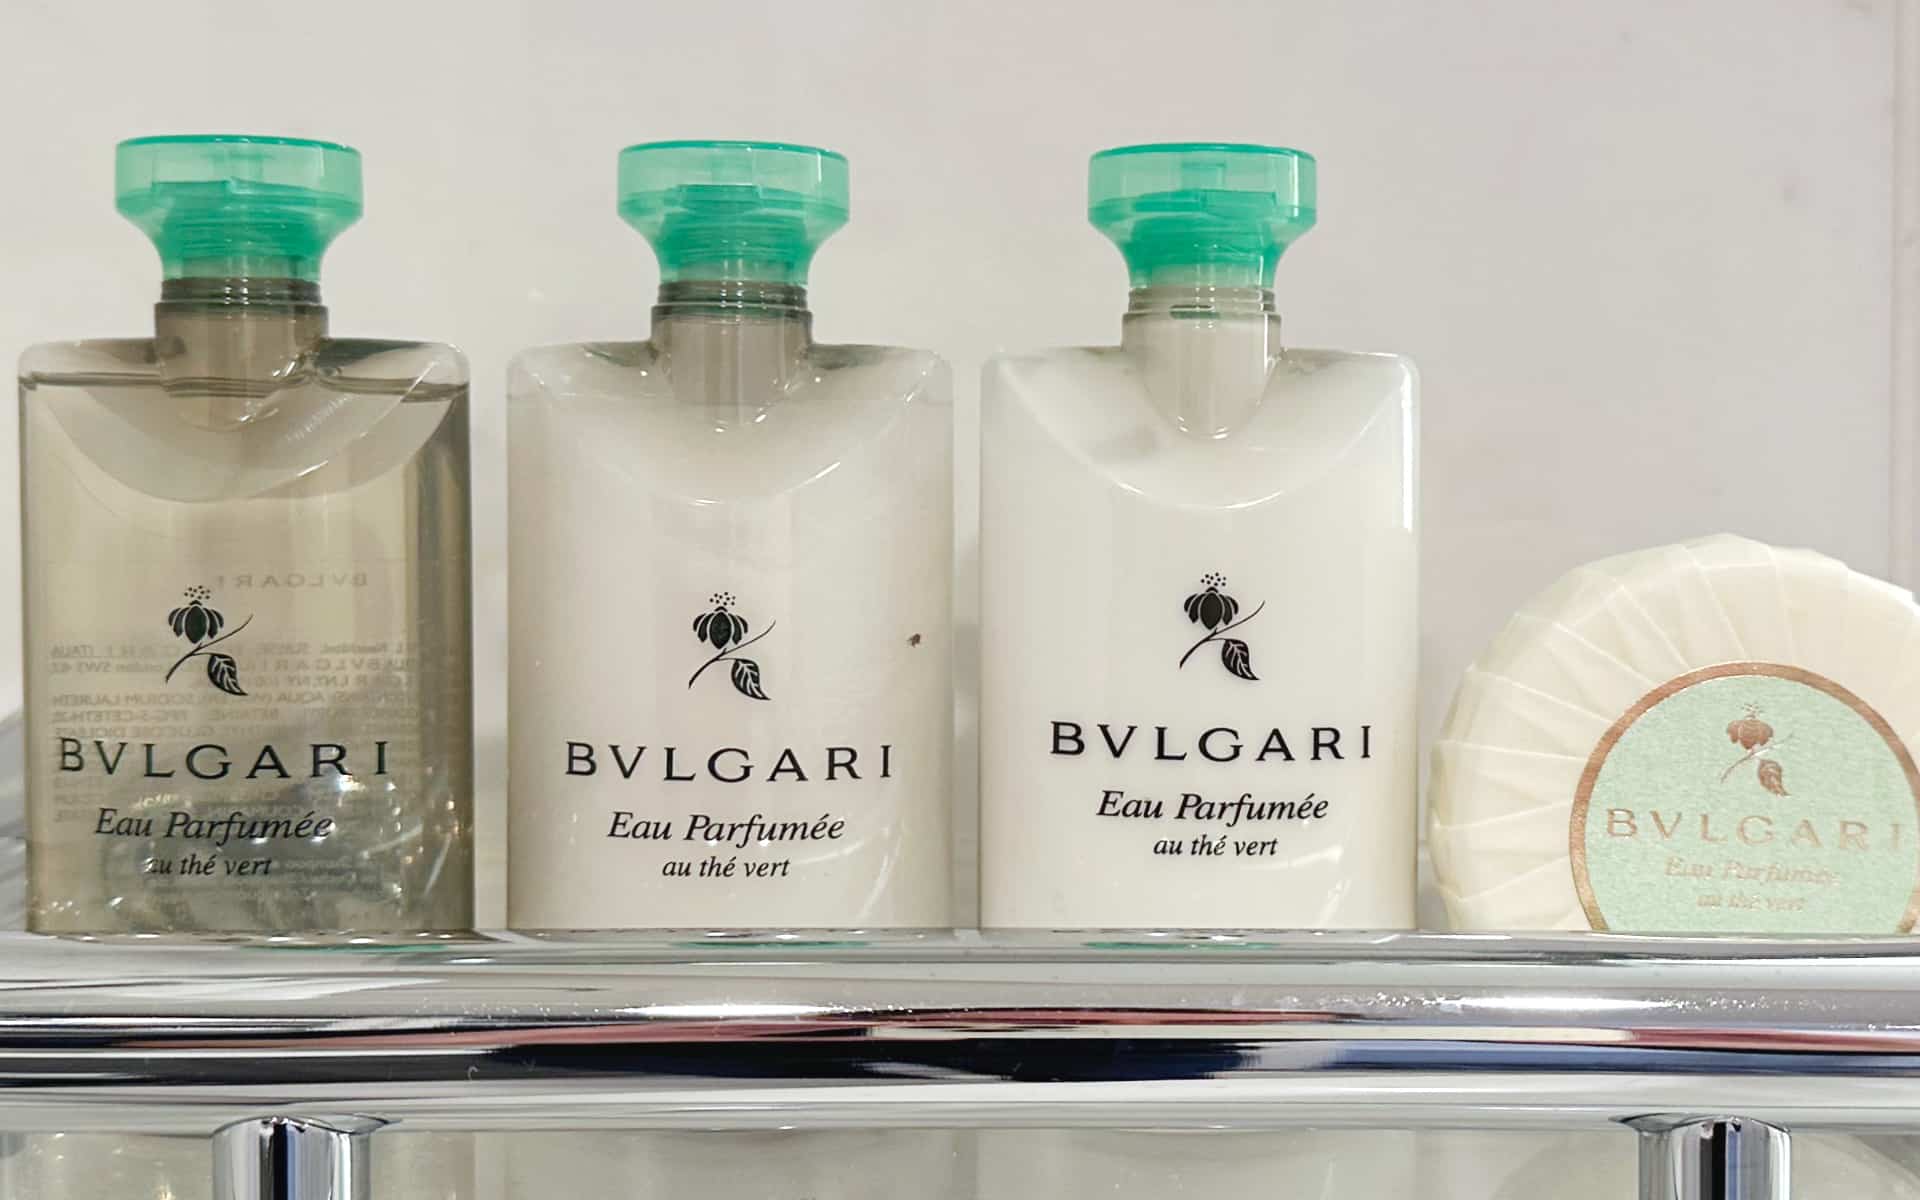 Bulgari bath products on Oceania's Riviera.